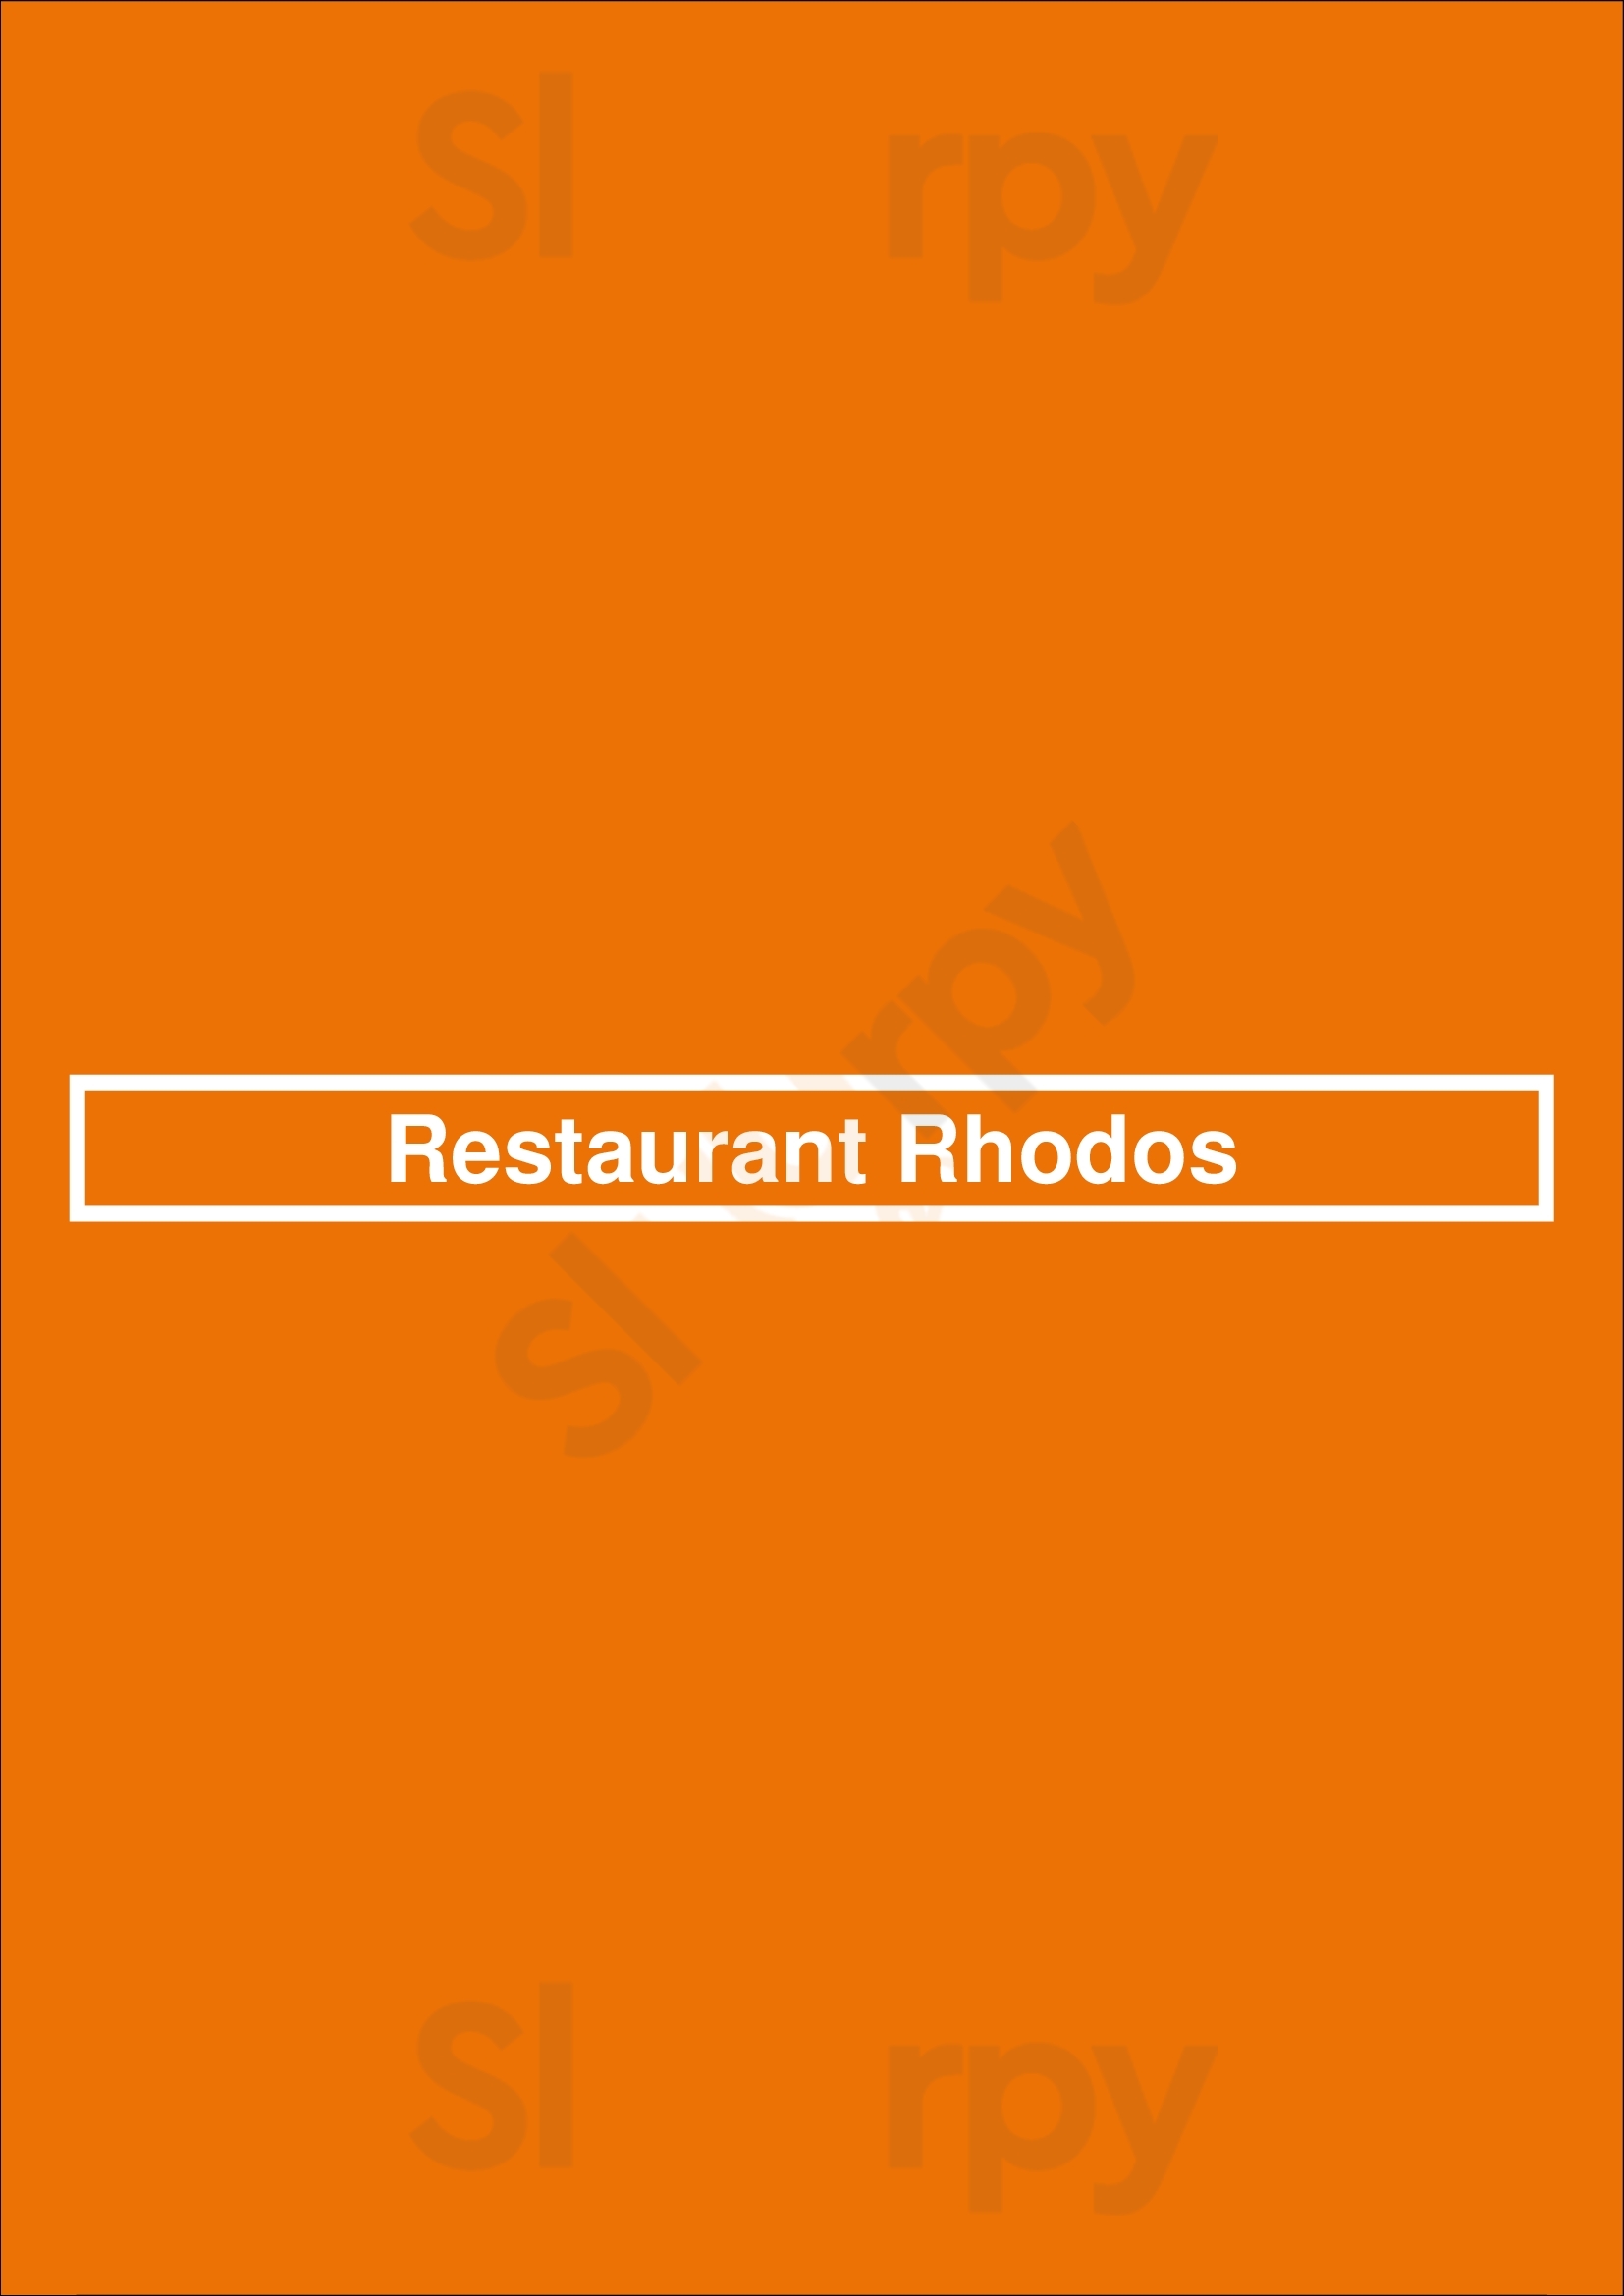 Restaurant Rhodos Gouda Menu - 1